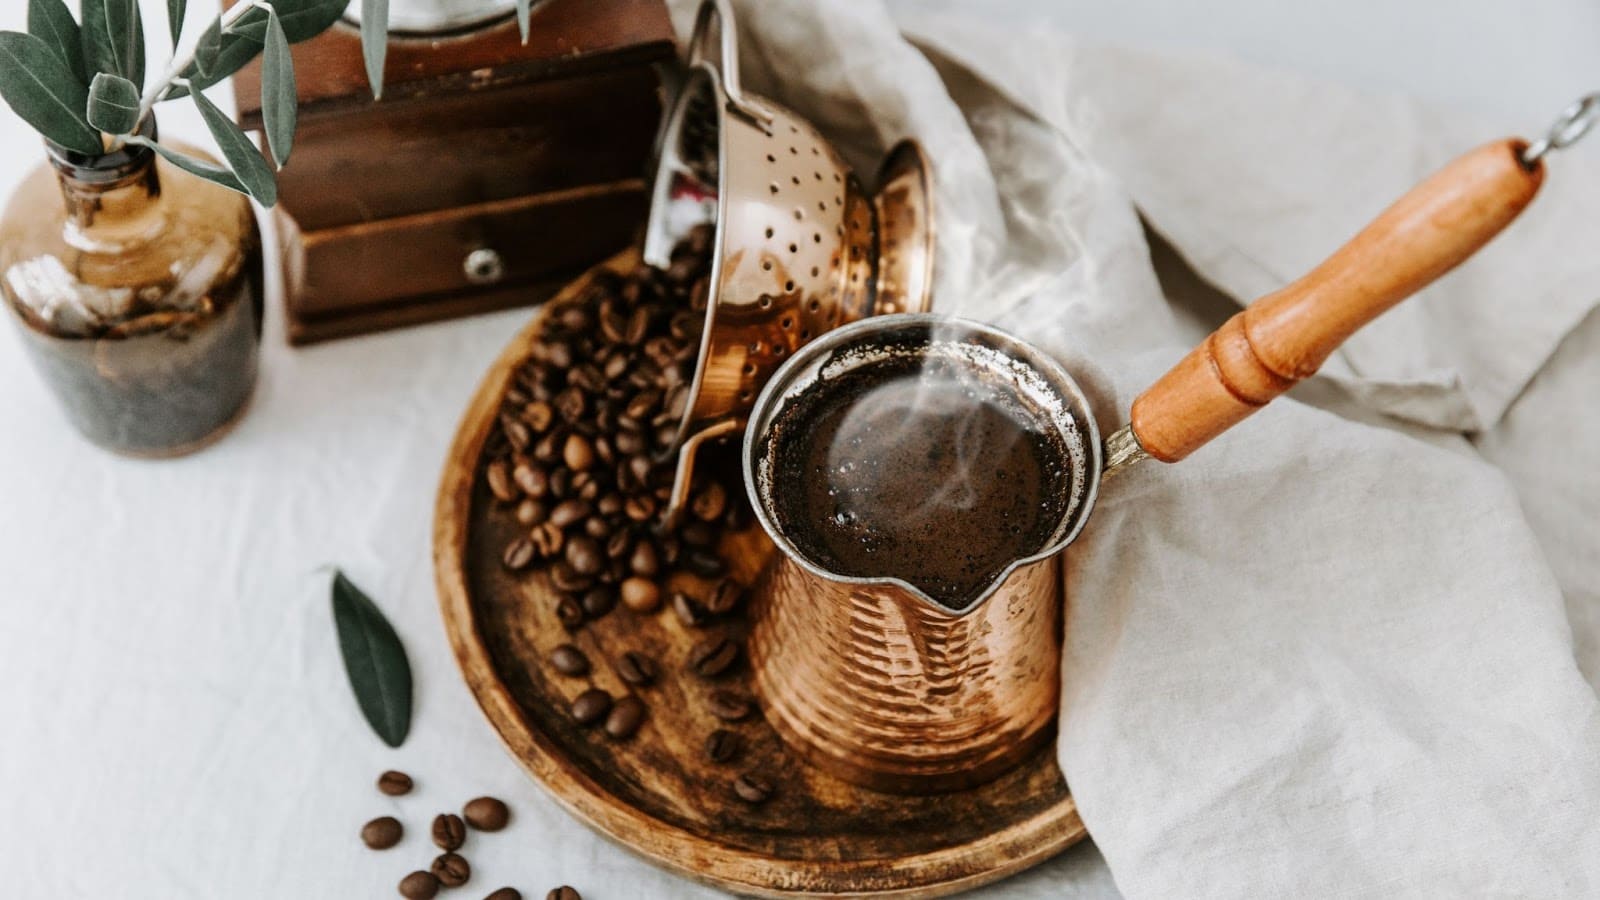 Highly caffeinated Türk Kahvesi from Turkey